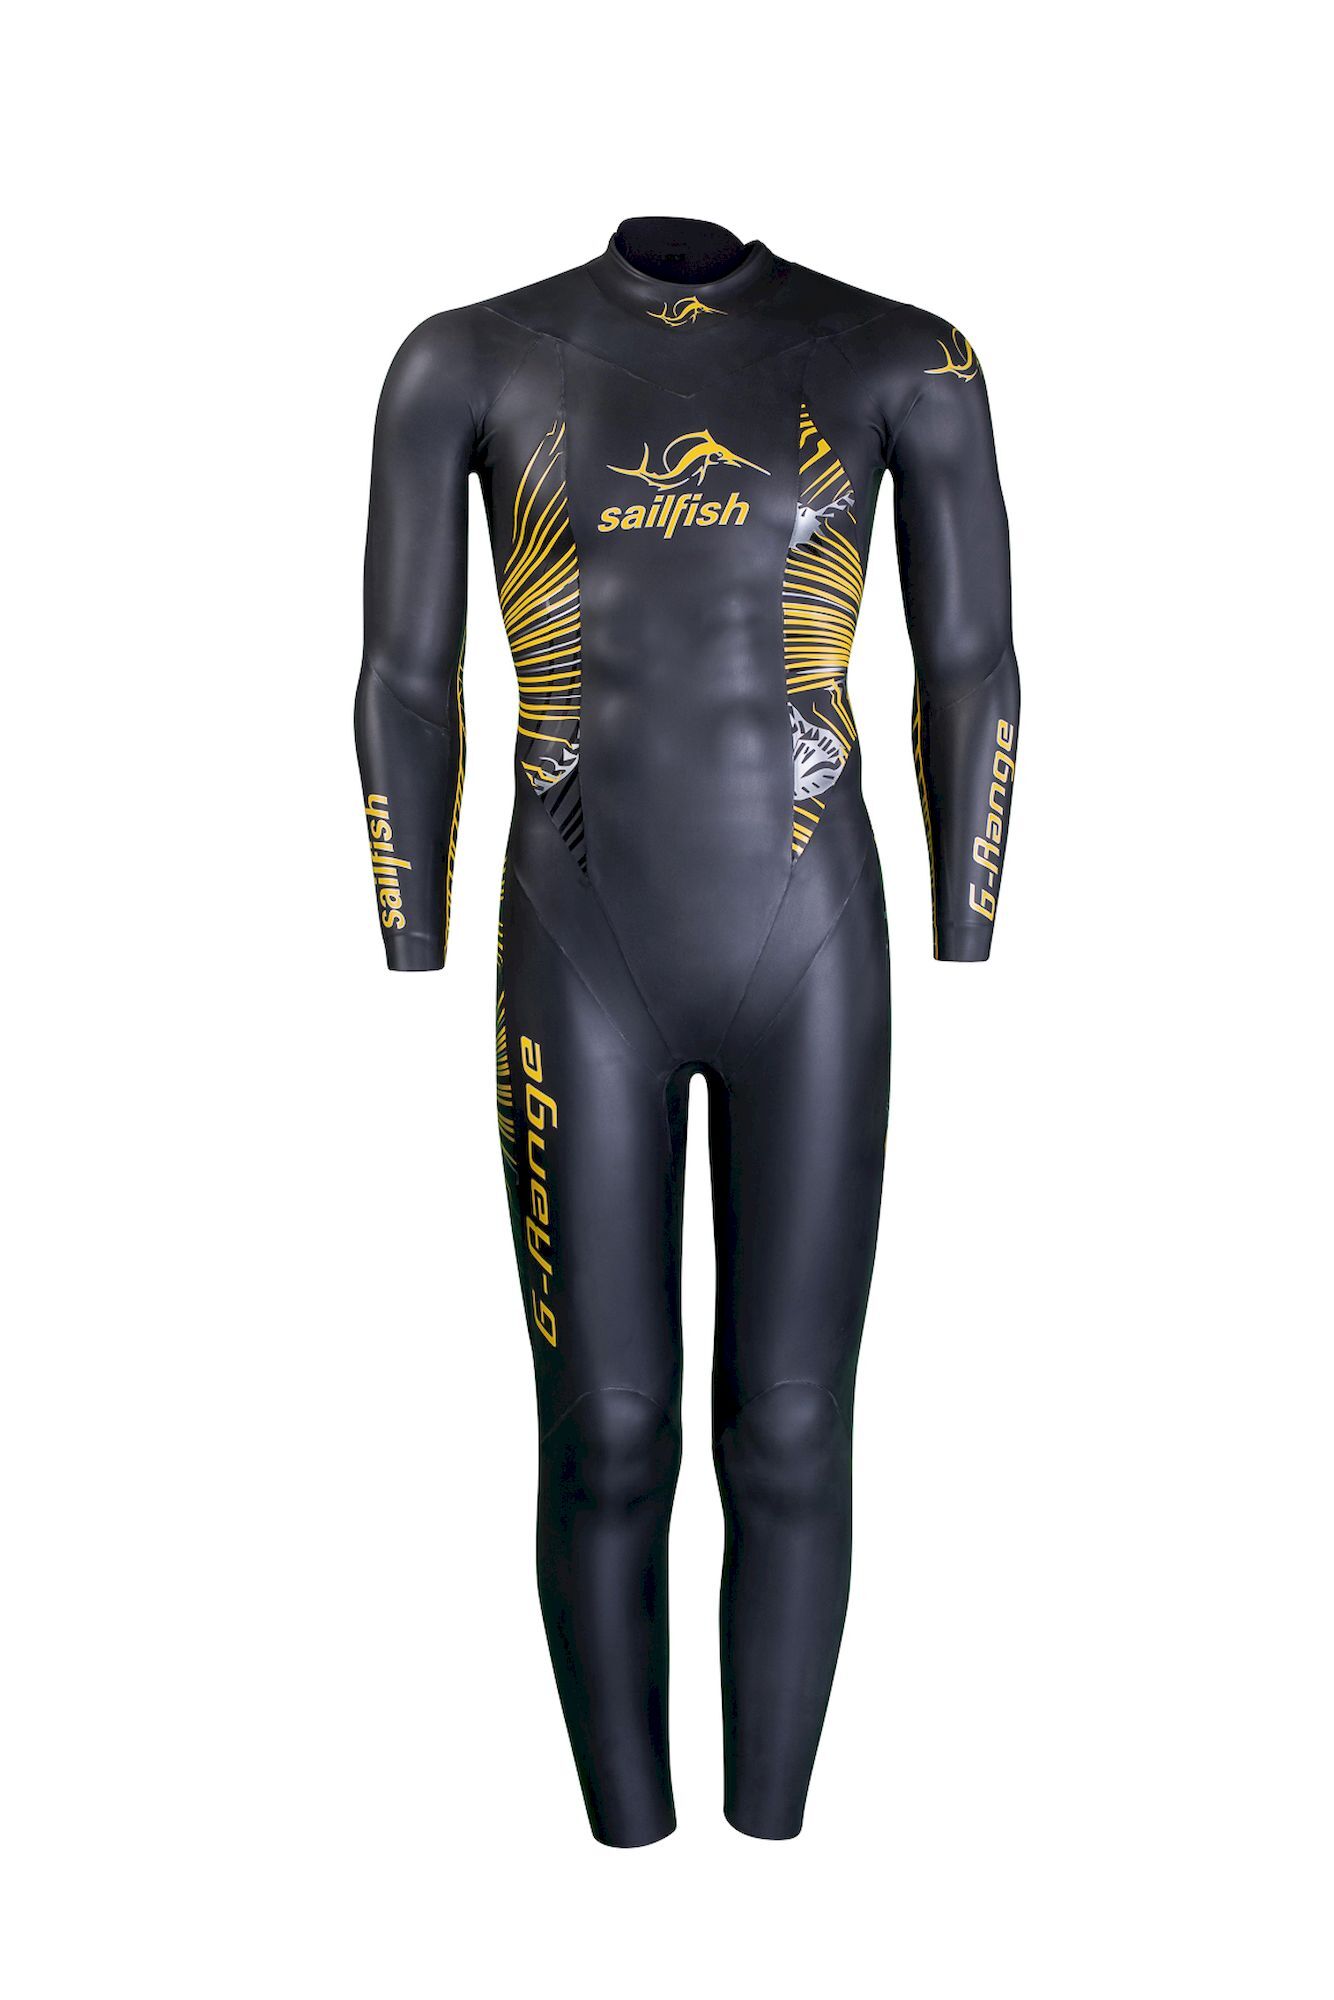 Sailfish Wetsuit Mens G-Range 8 - Neoprene wetsuit - Men's